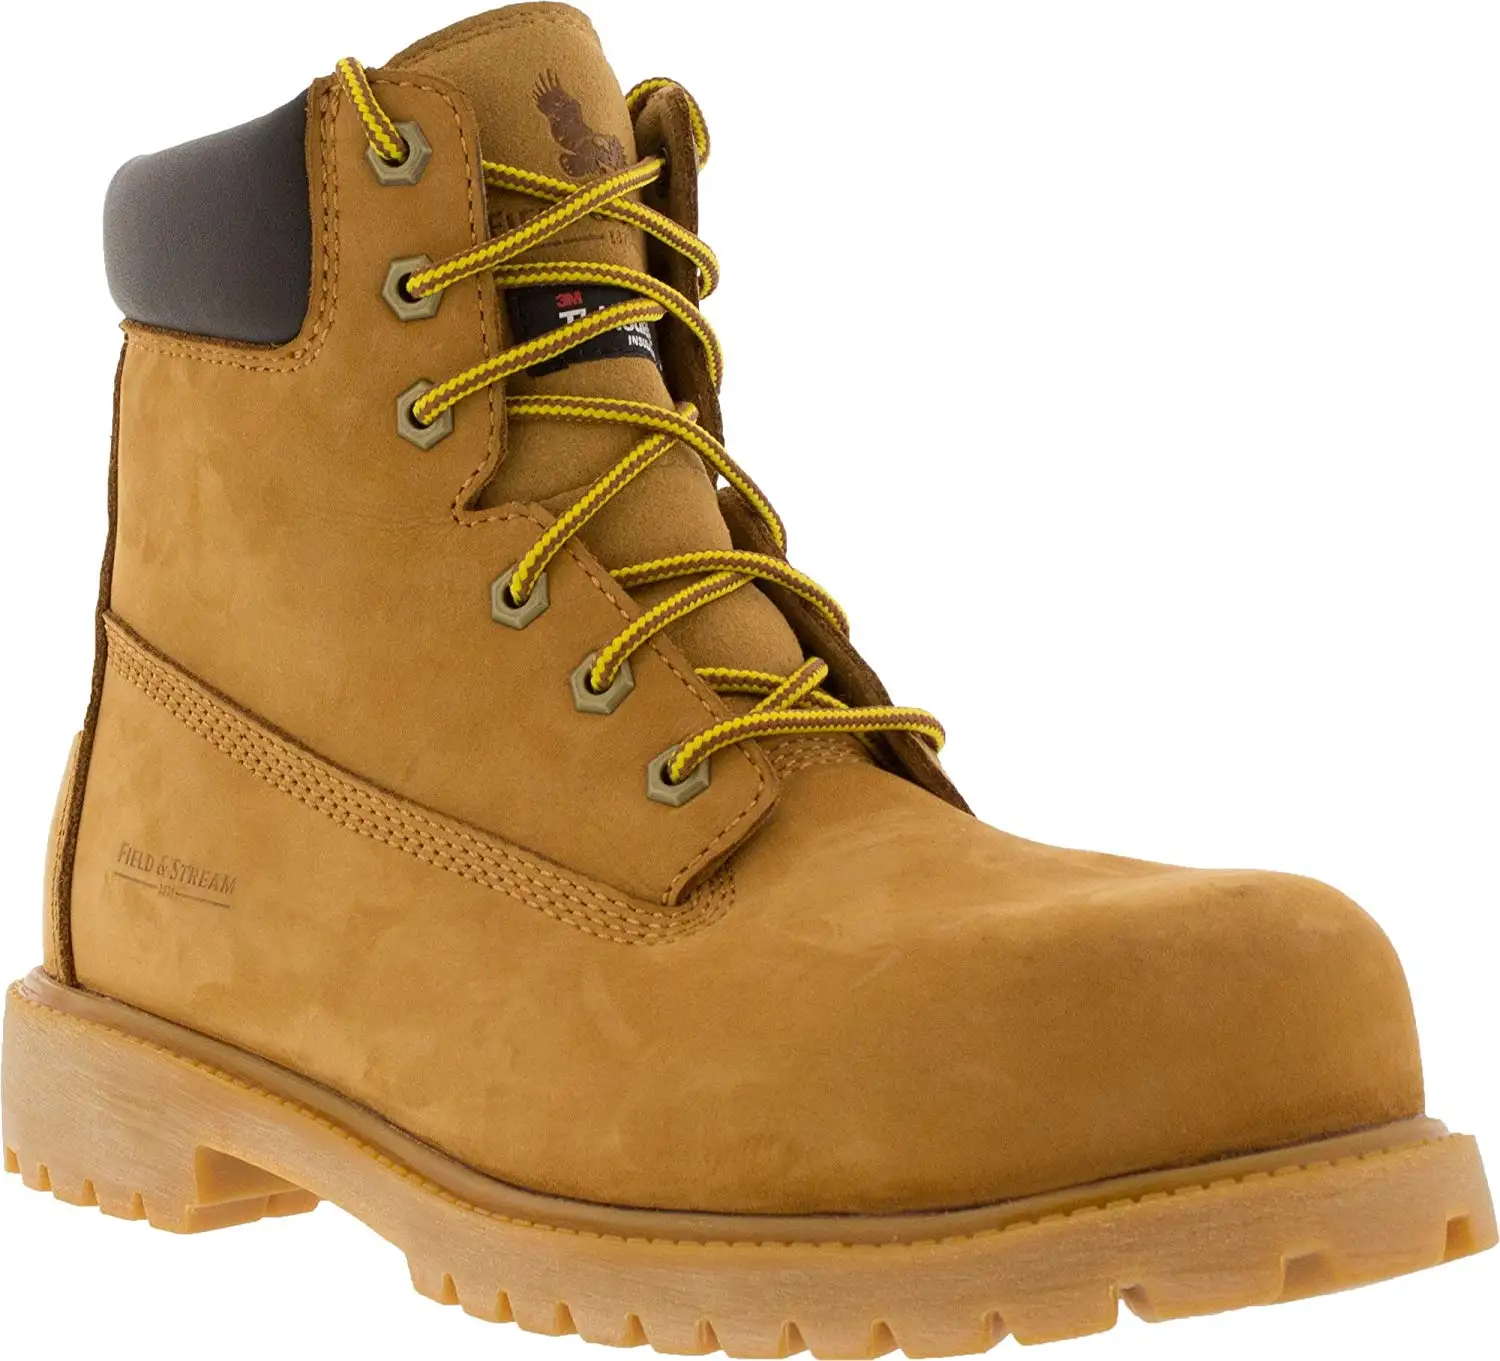 men's classic work boots